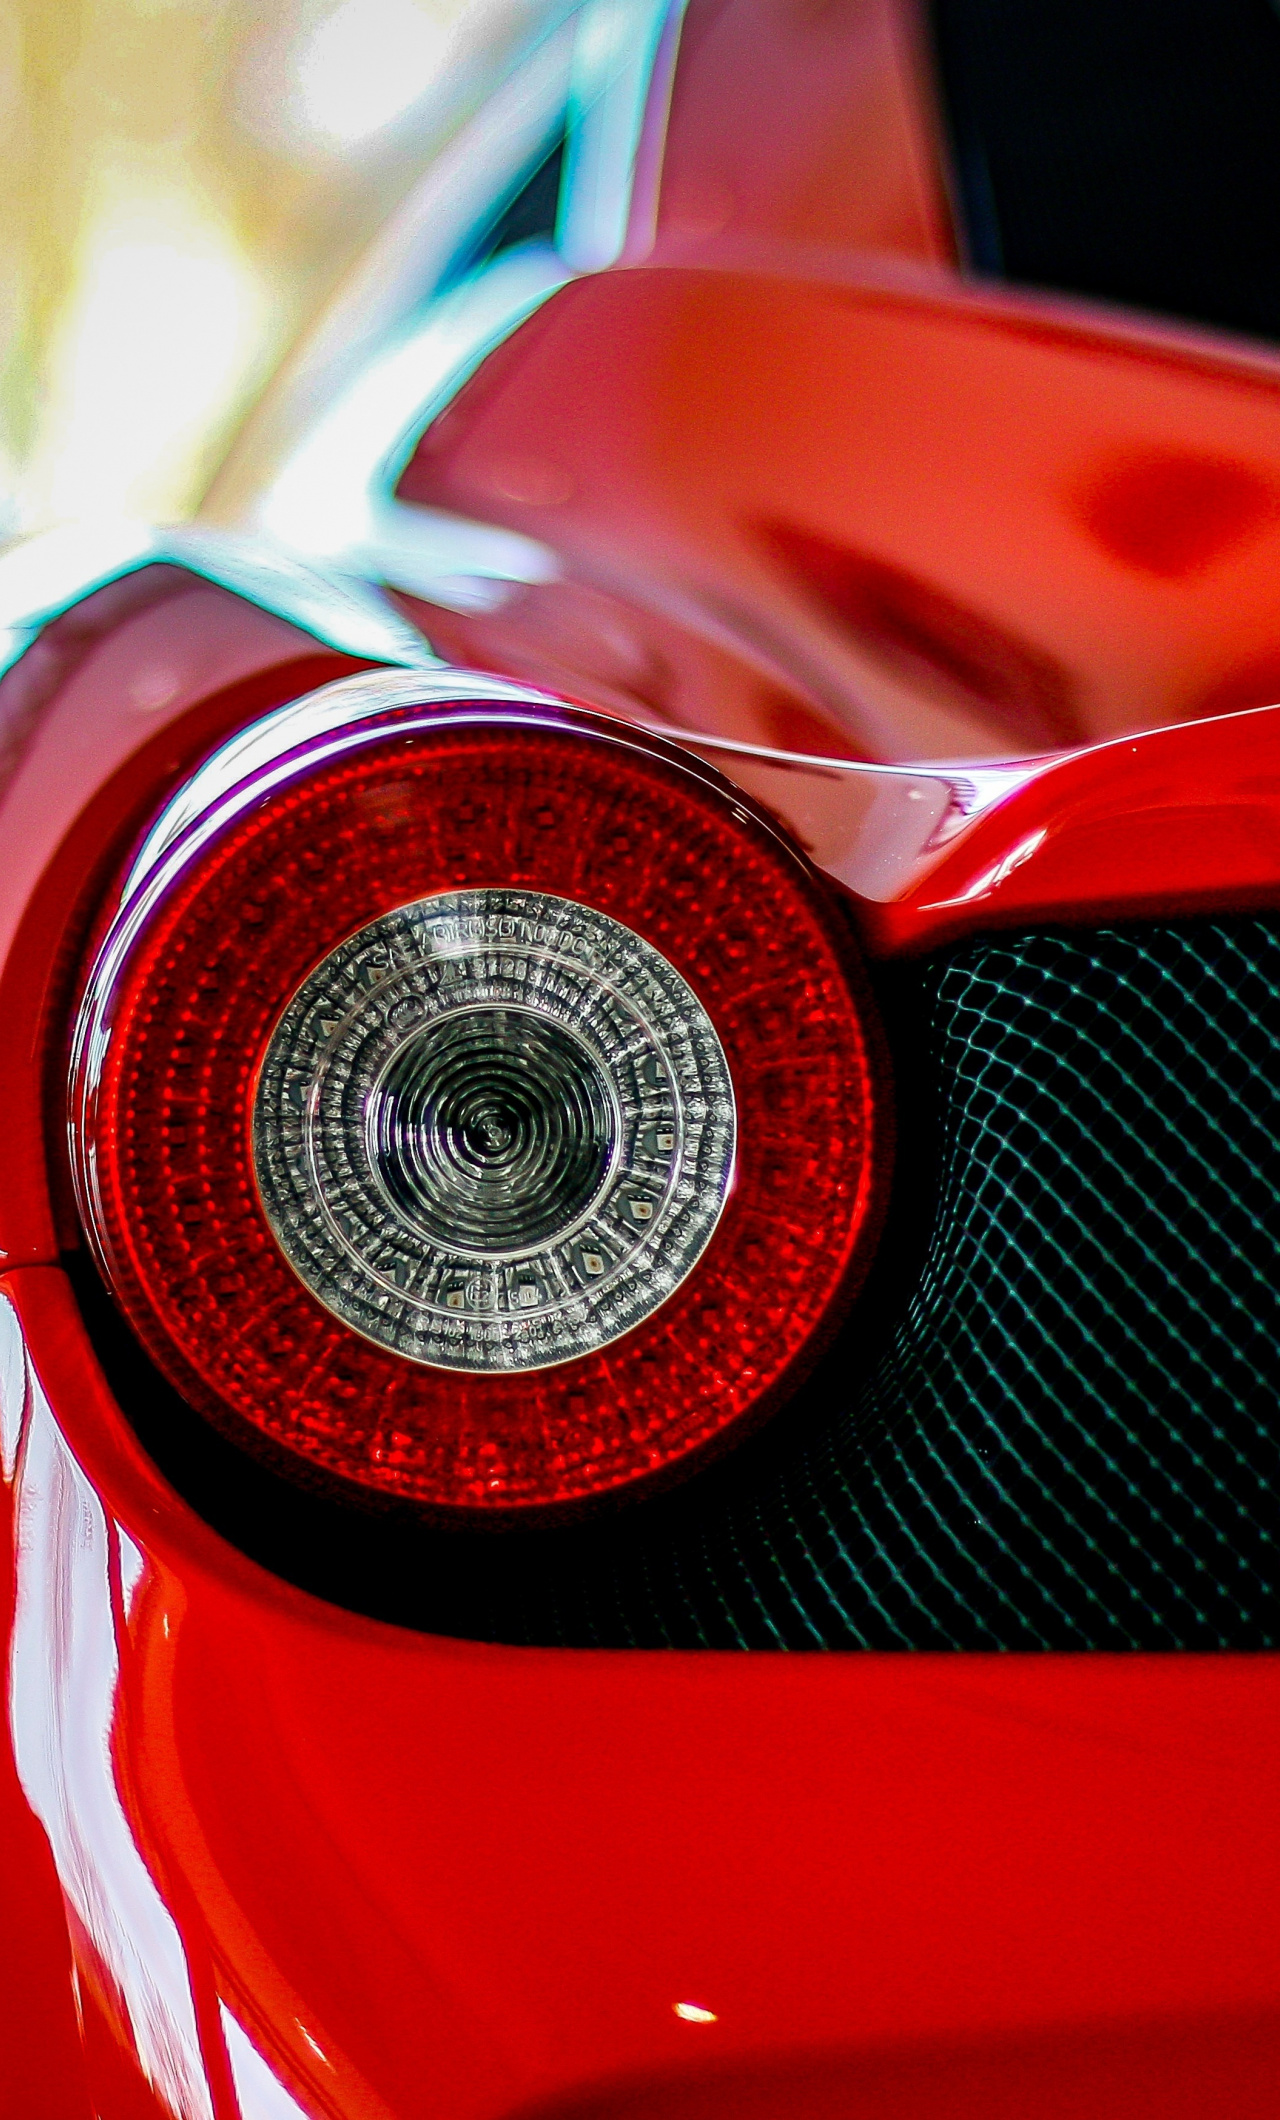 Taillight, Rear, Ferrari 458, Wallpaper - Ferrari Wallpaper Smartphone , HD Wallpaper & Backgrounds